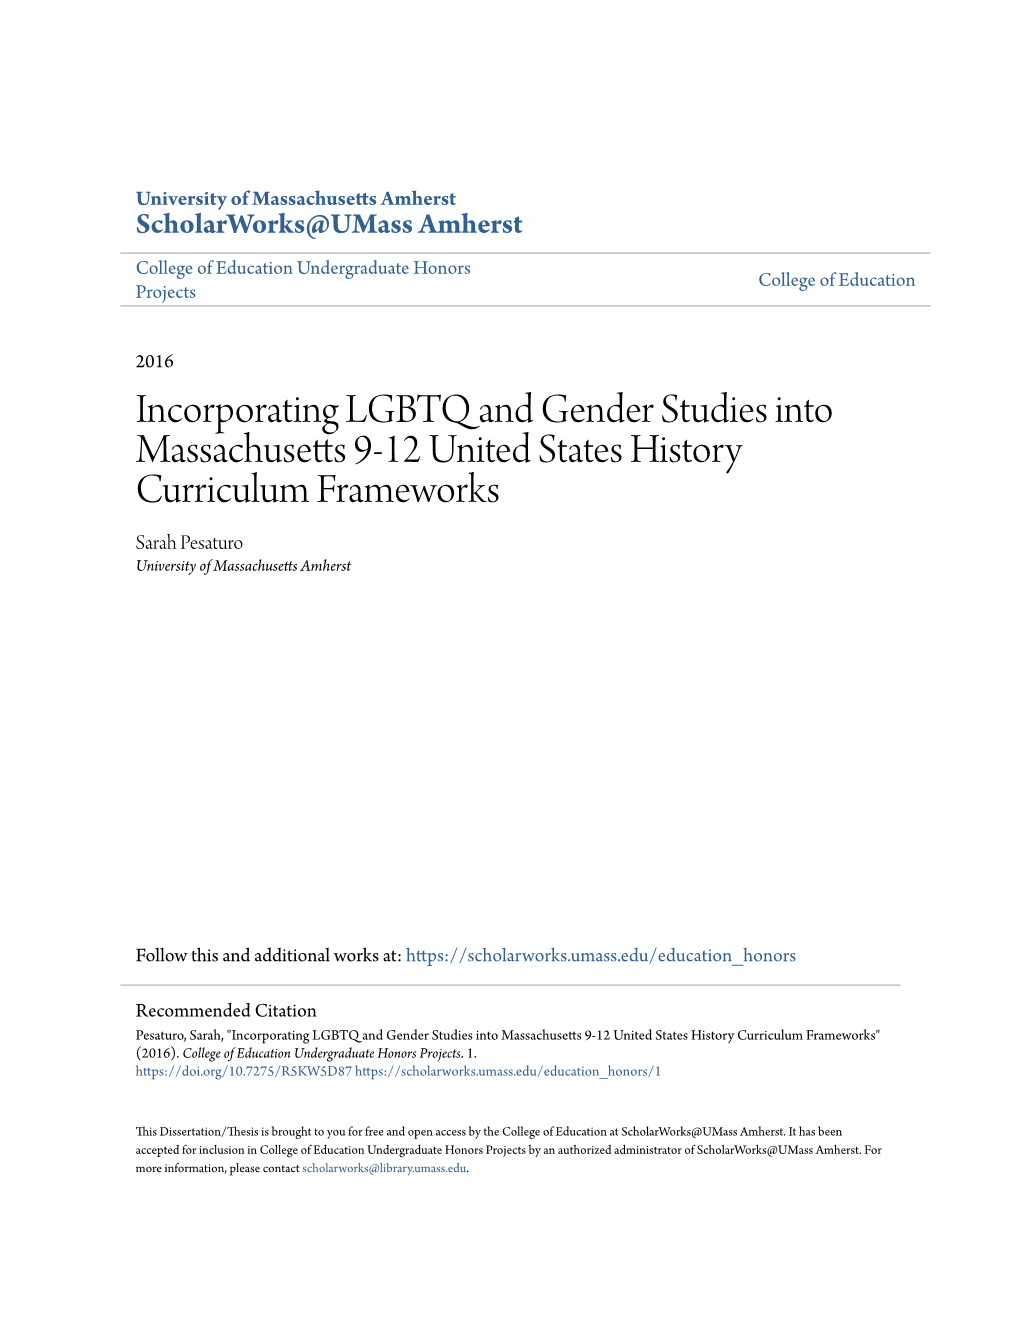 Incorporating LGBTQ and Gender Studies Into Massachusetts 9-12 United States History Curriculum Frameworks Sarah Pesaturo University of Massachusetts Amherst